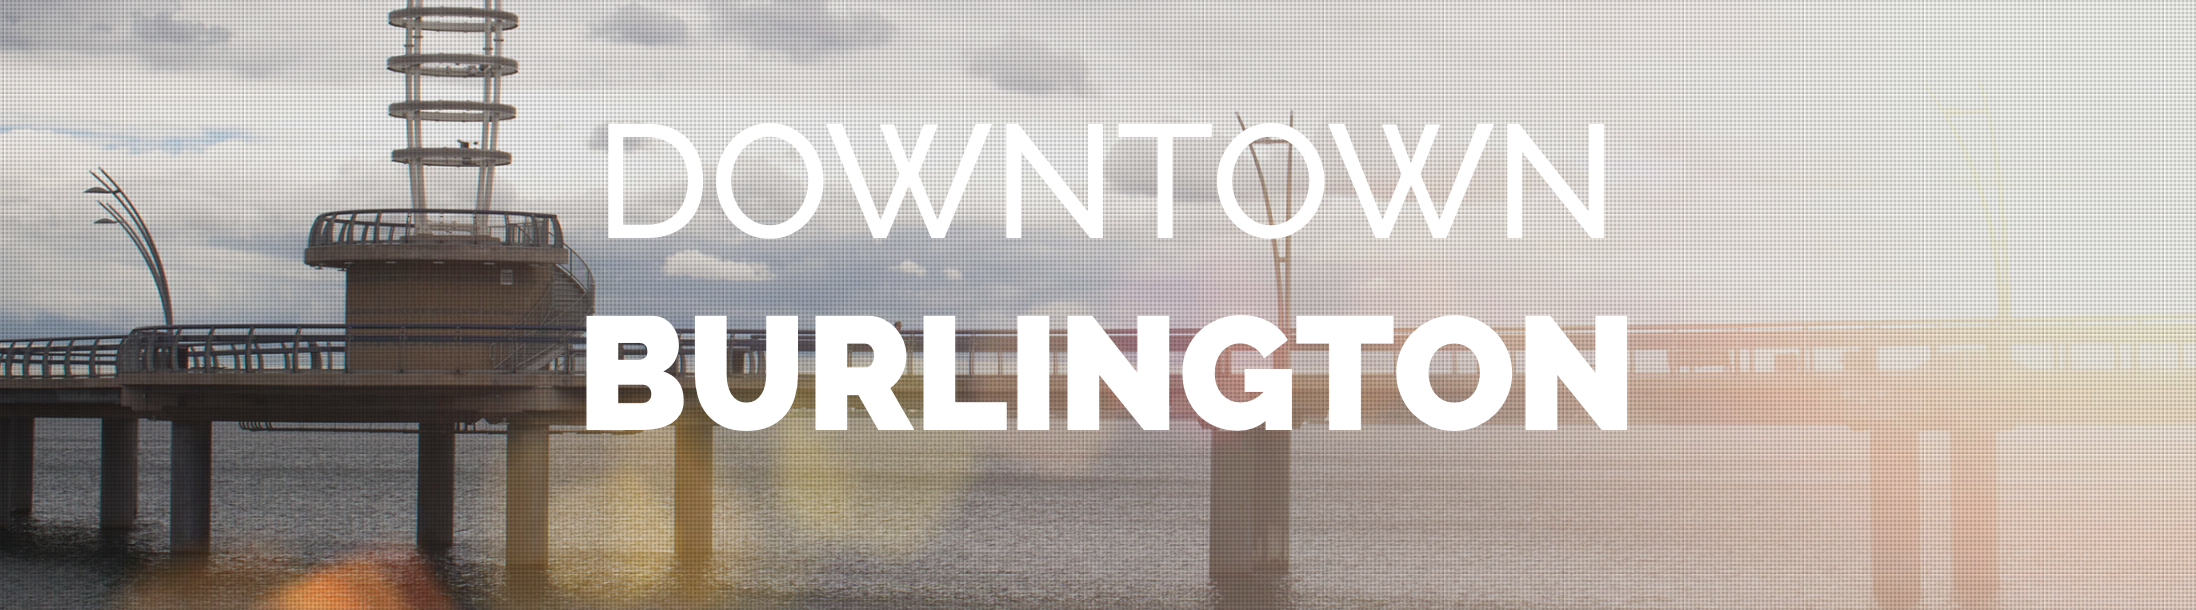 Explore Burlington - Downtown neighbourhood with The Mink Group real estate.